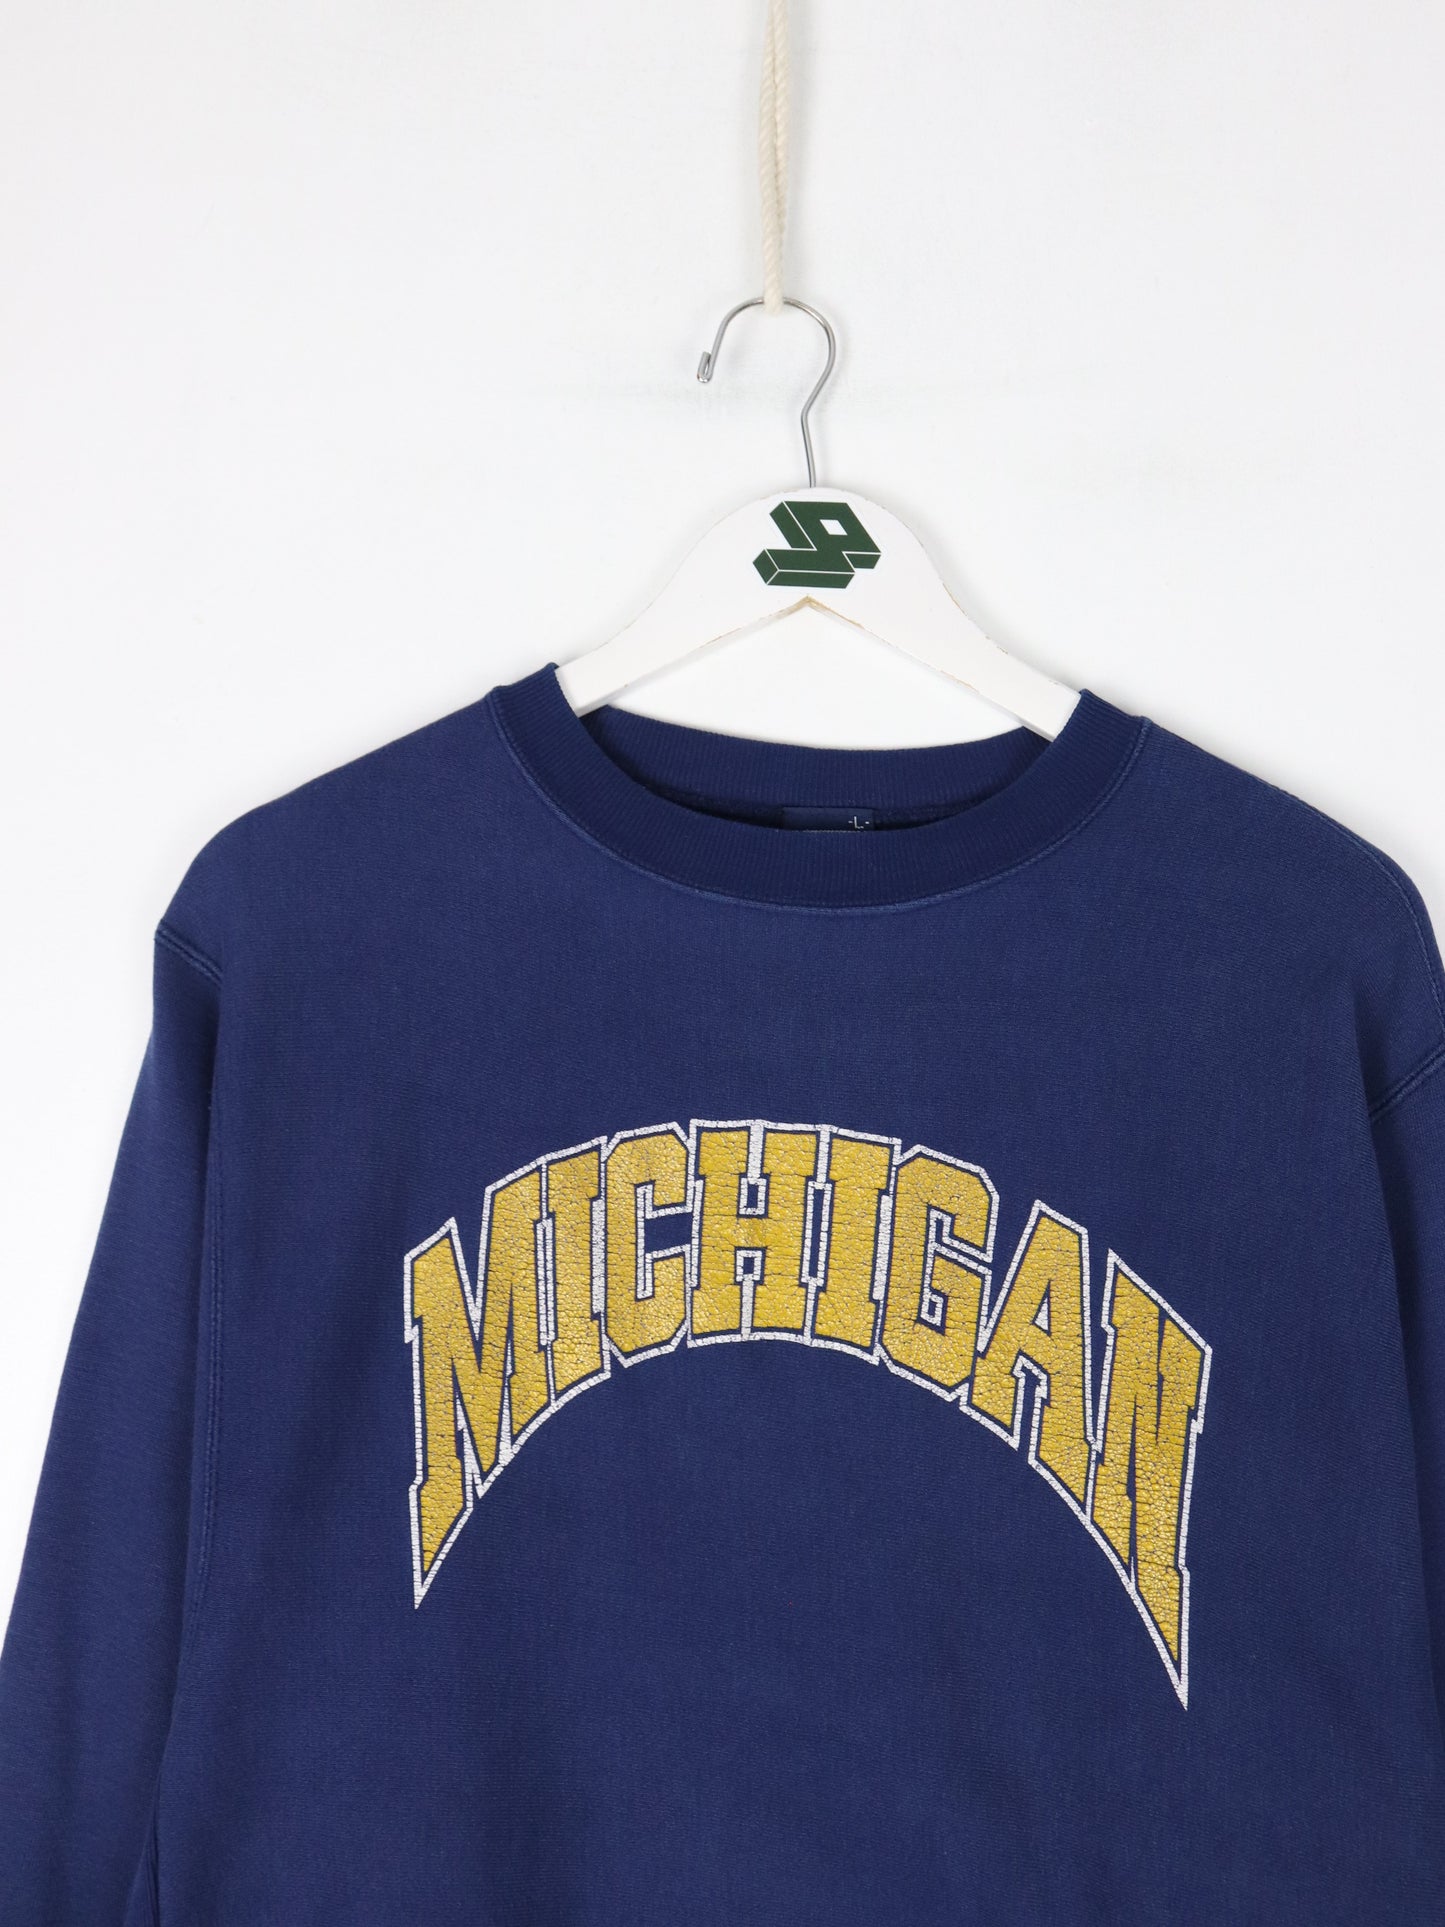 Vintage Michigan Wolverines Sweatshirt Mens Large Blue College